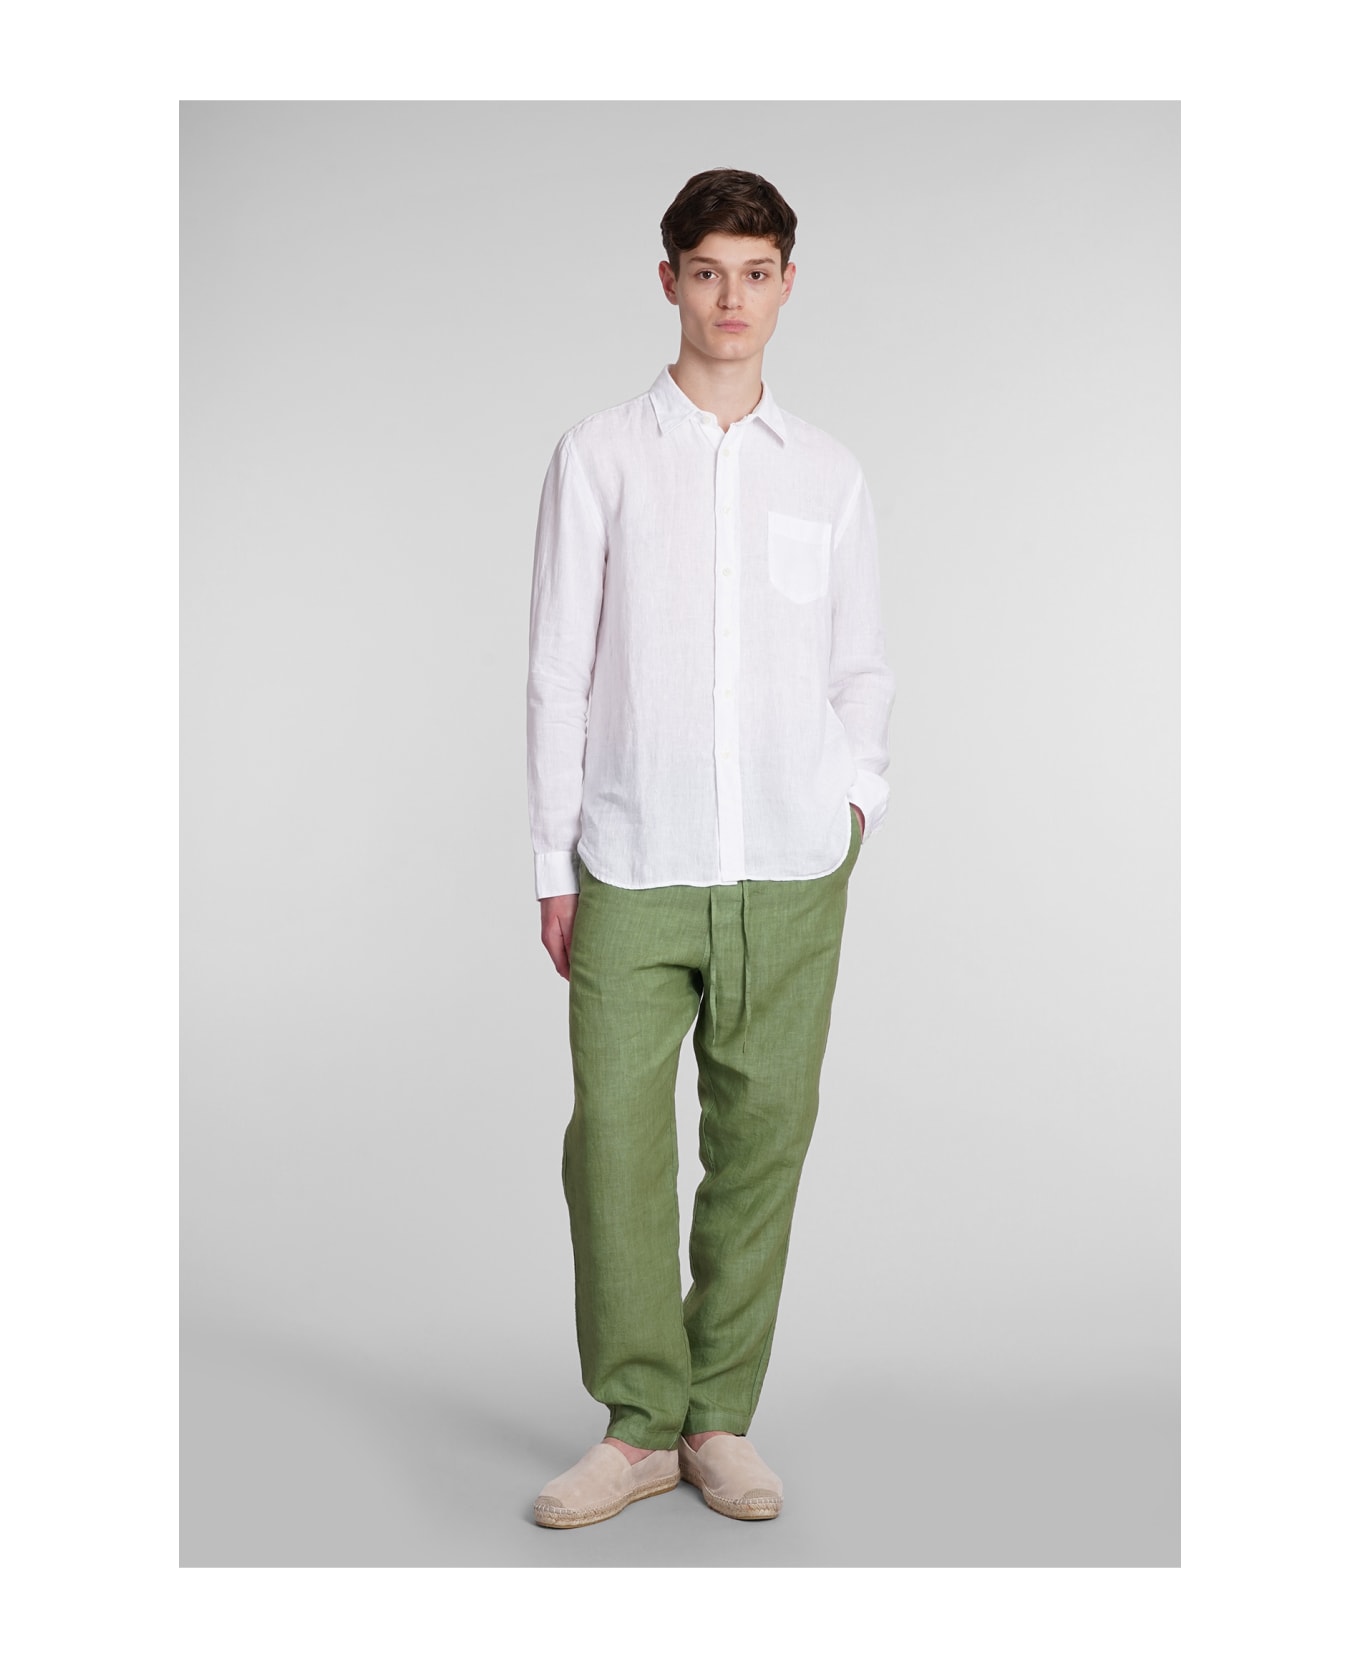 120% Lino Pants In Green Linen